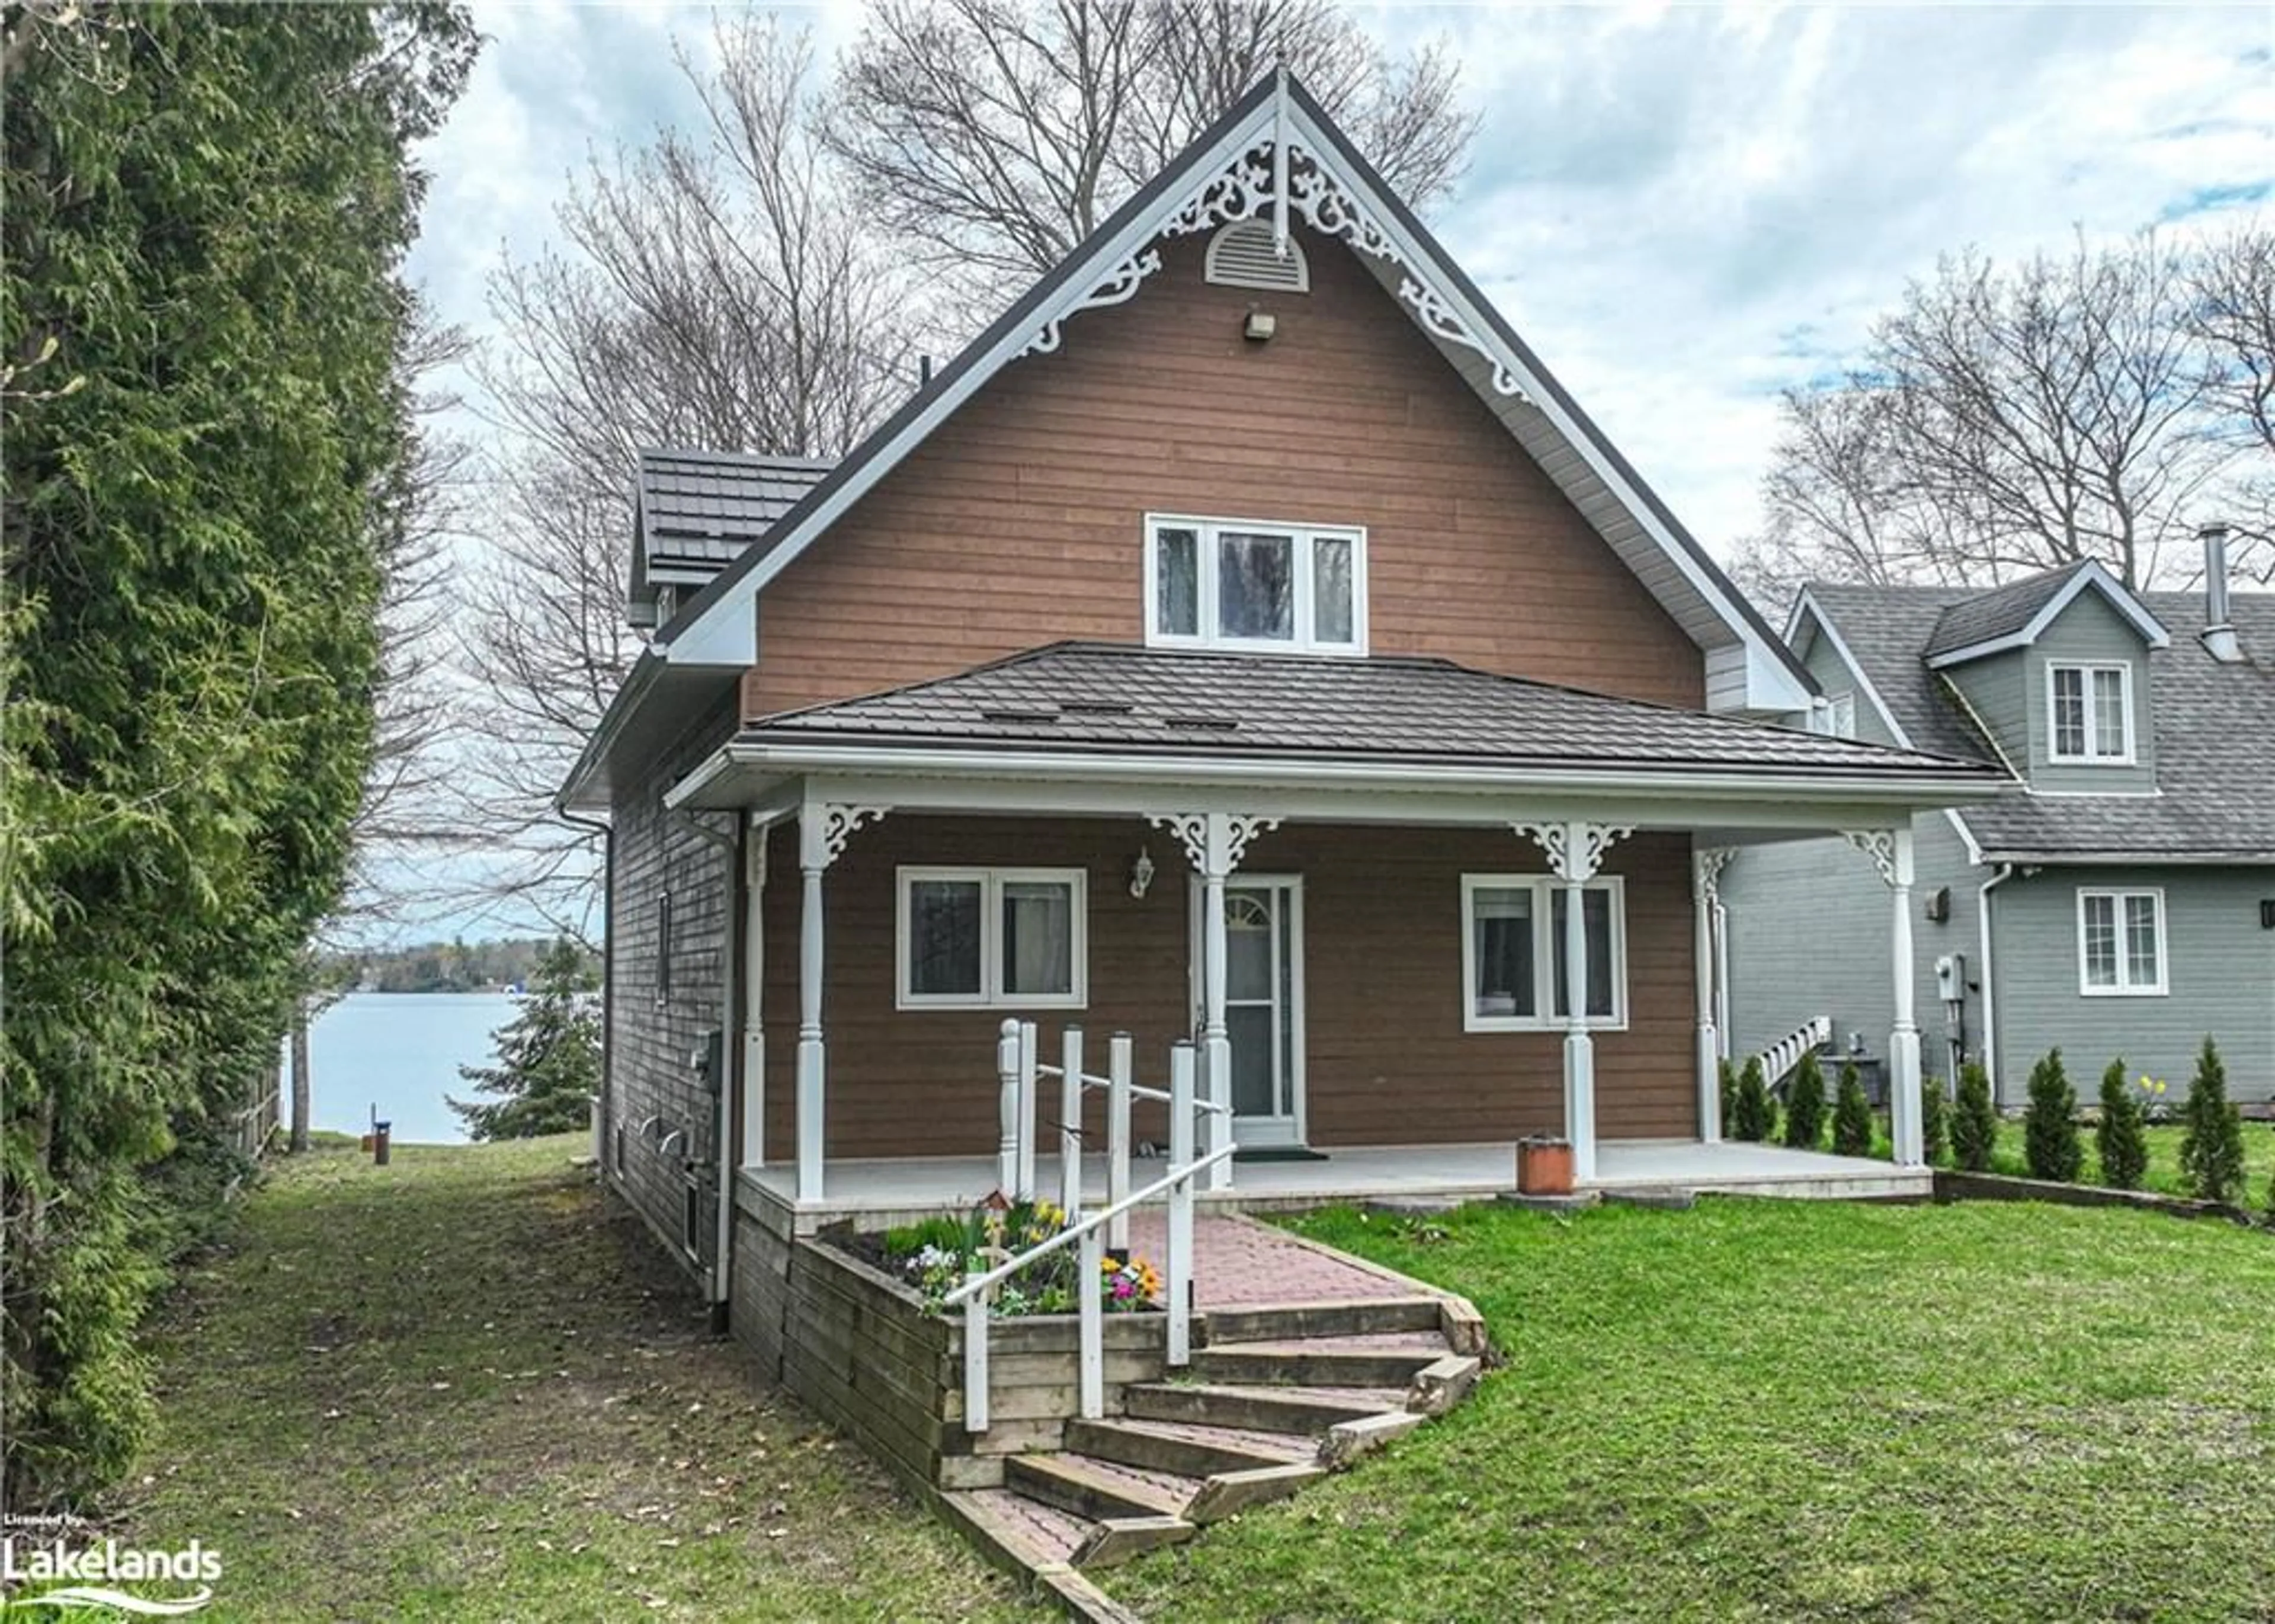 Cottage for 471 Victoria Crescent, Orillia Ontario L3V 0J5